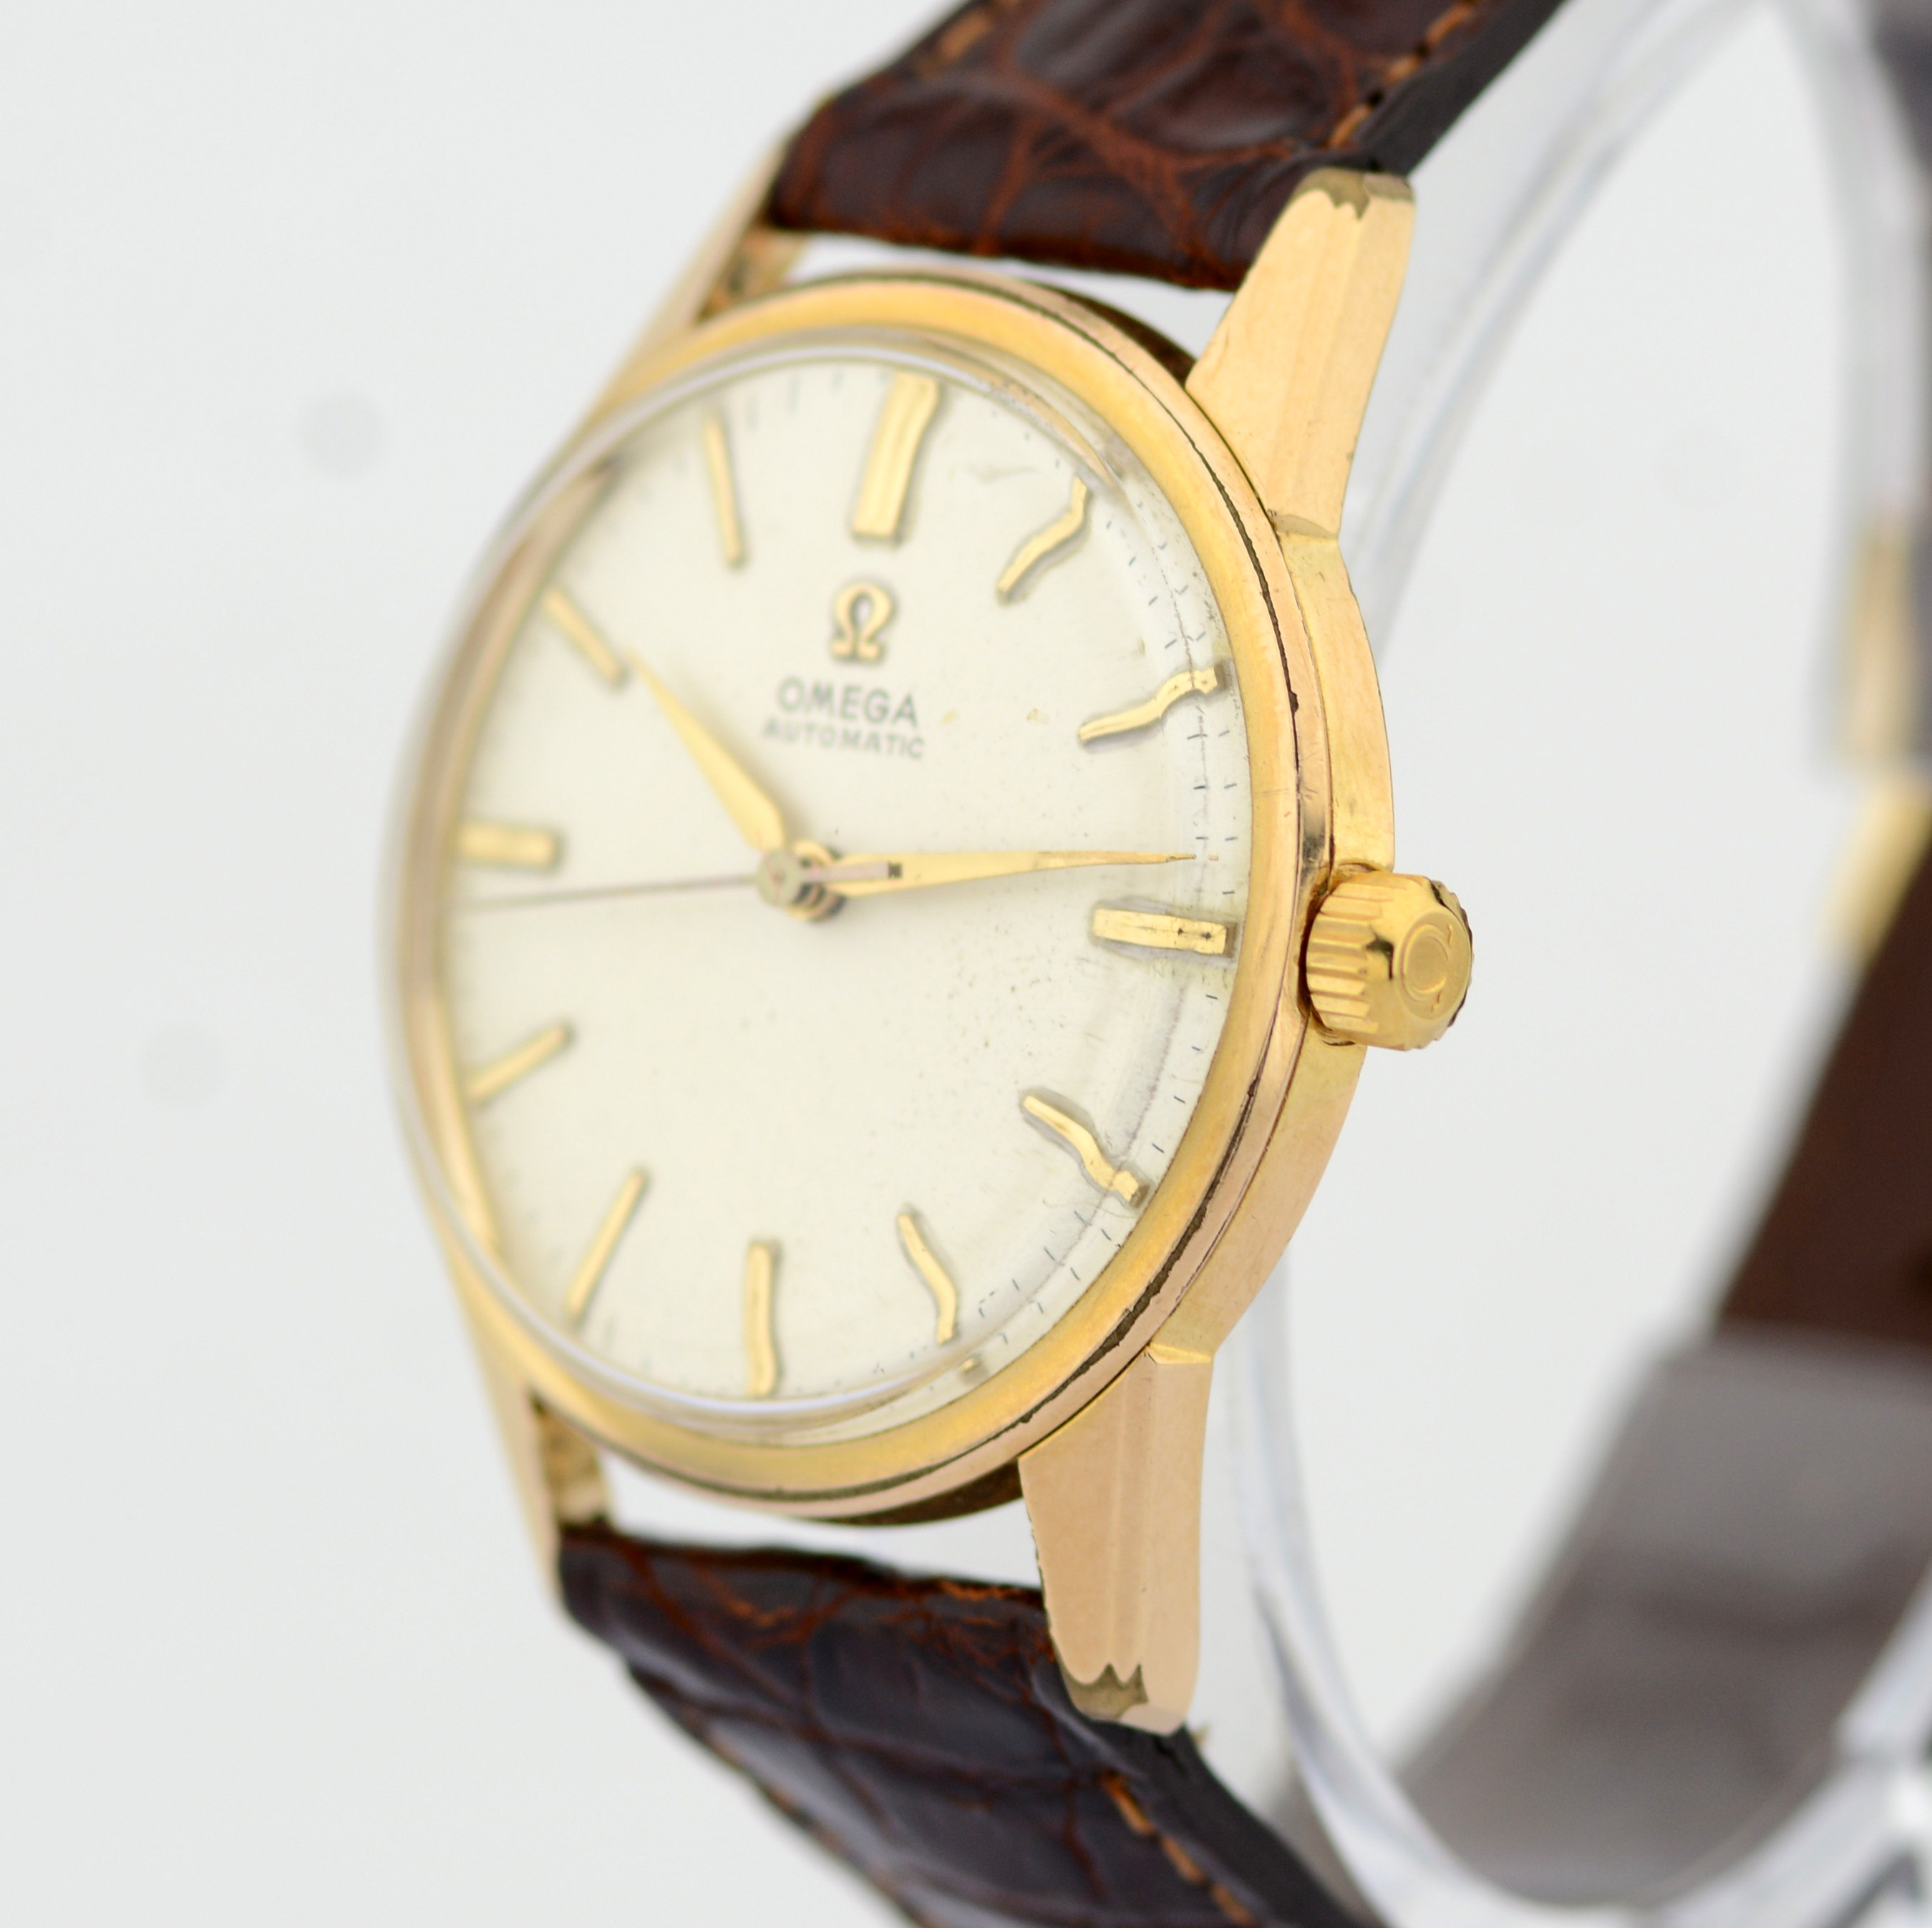 Omega / Vintage Automatic - Gentlmen's Gold/Steel Wrist Watch - Image 2 of 8